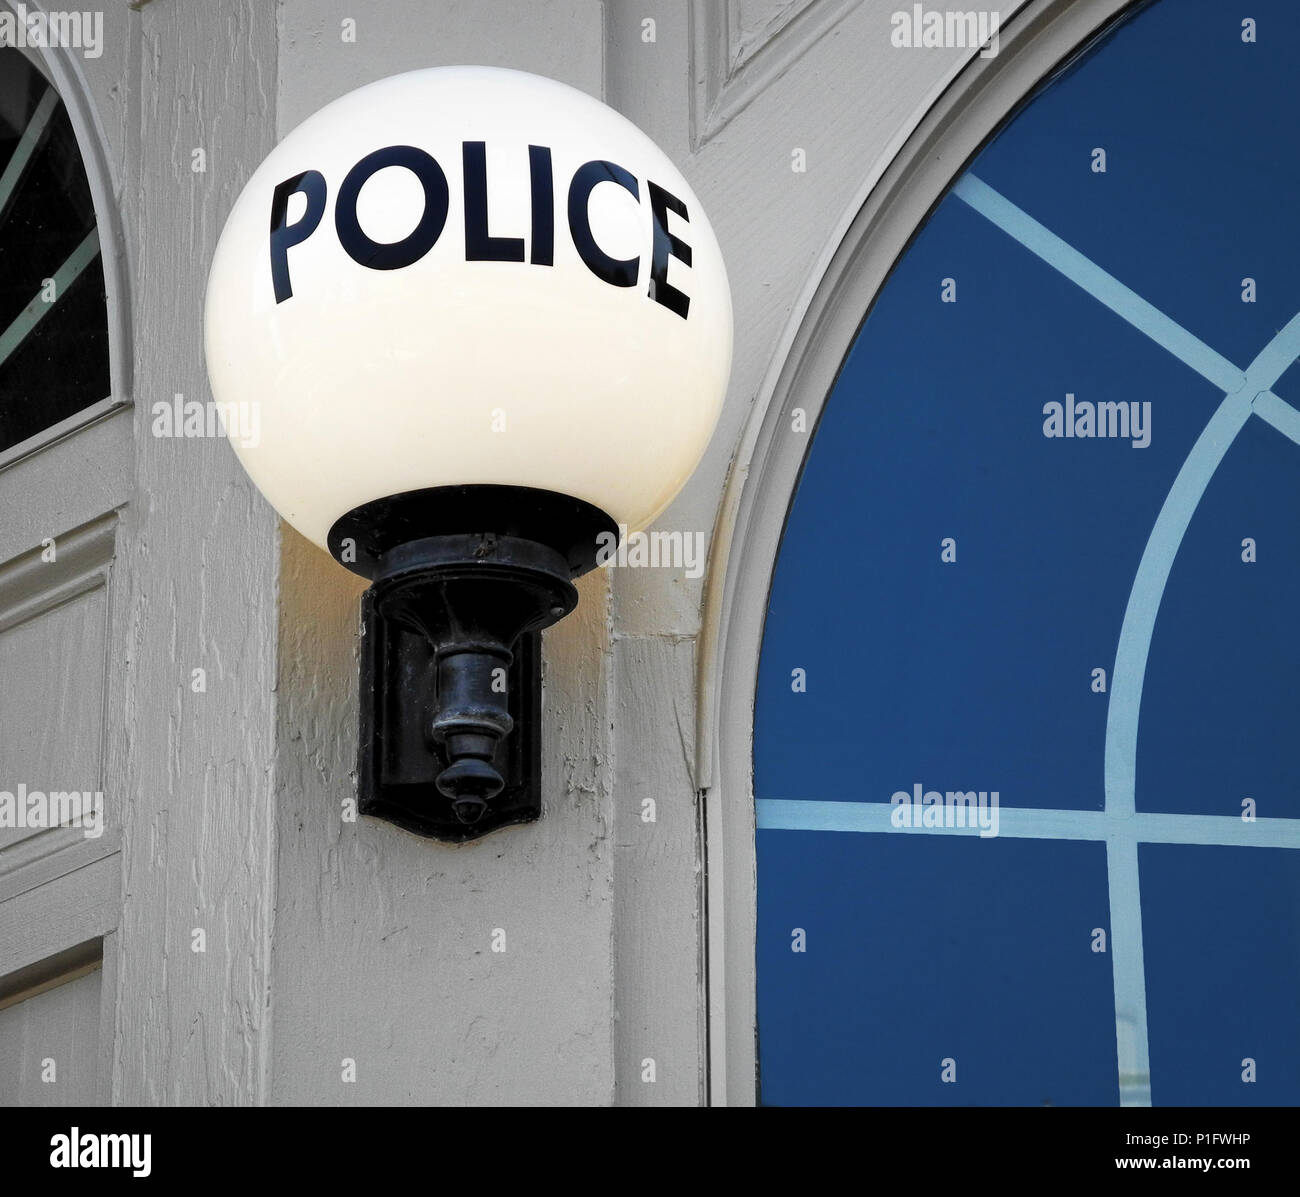 Police station entrance and globe light sign Stock Photo